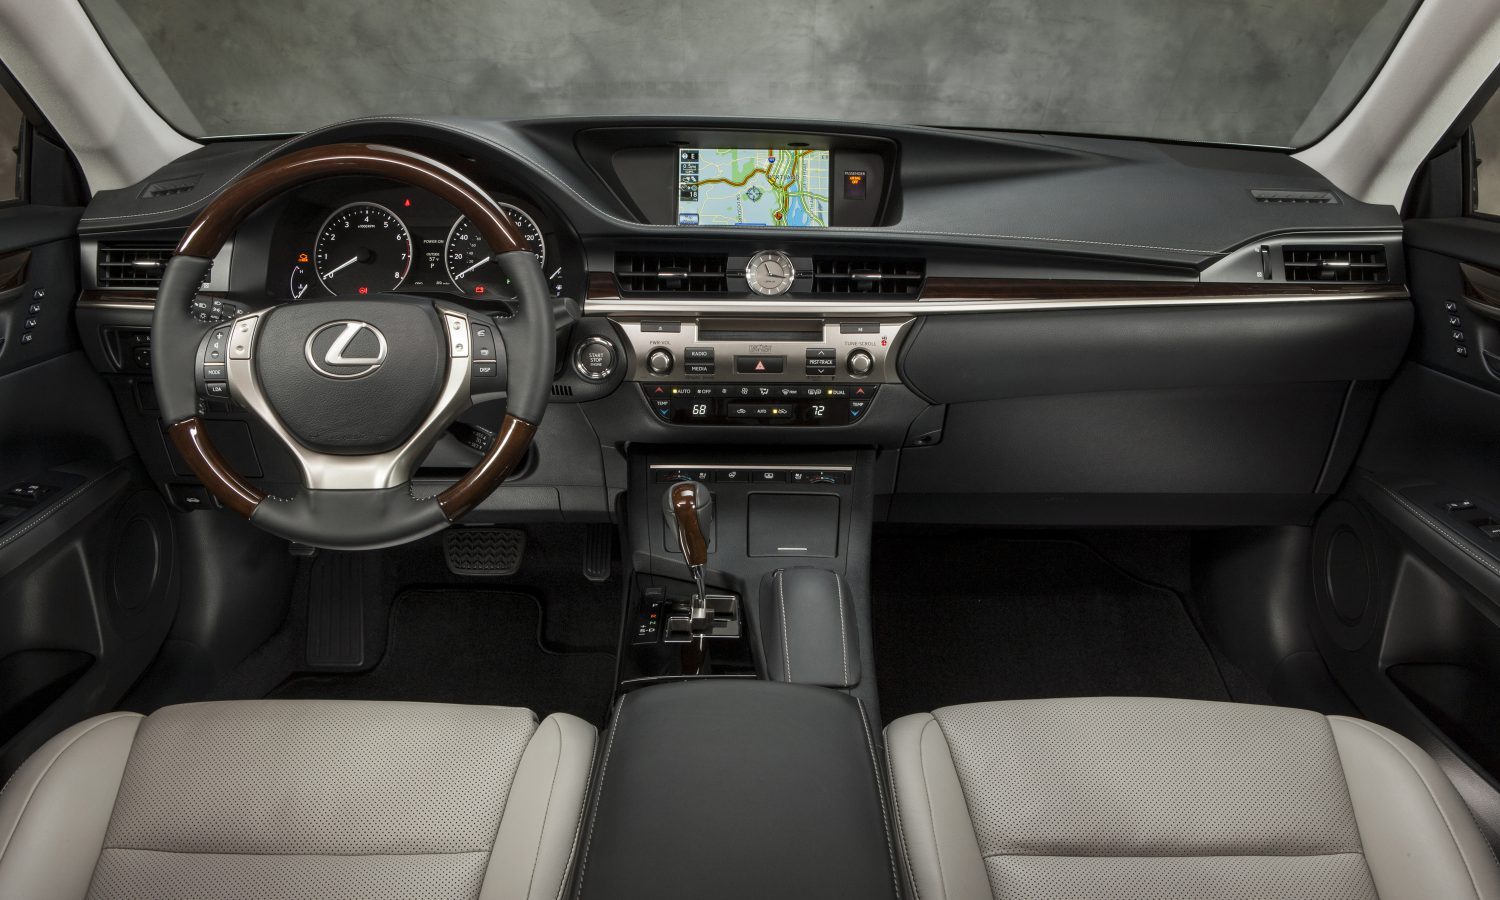 2013 - 2015 Lexus ES 350 019 - Lexus USA Newsroom